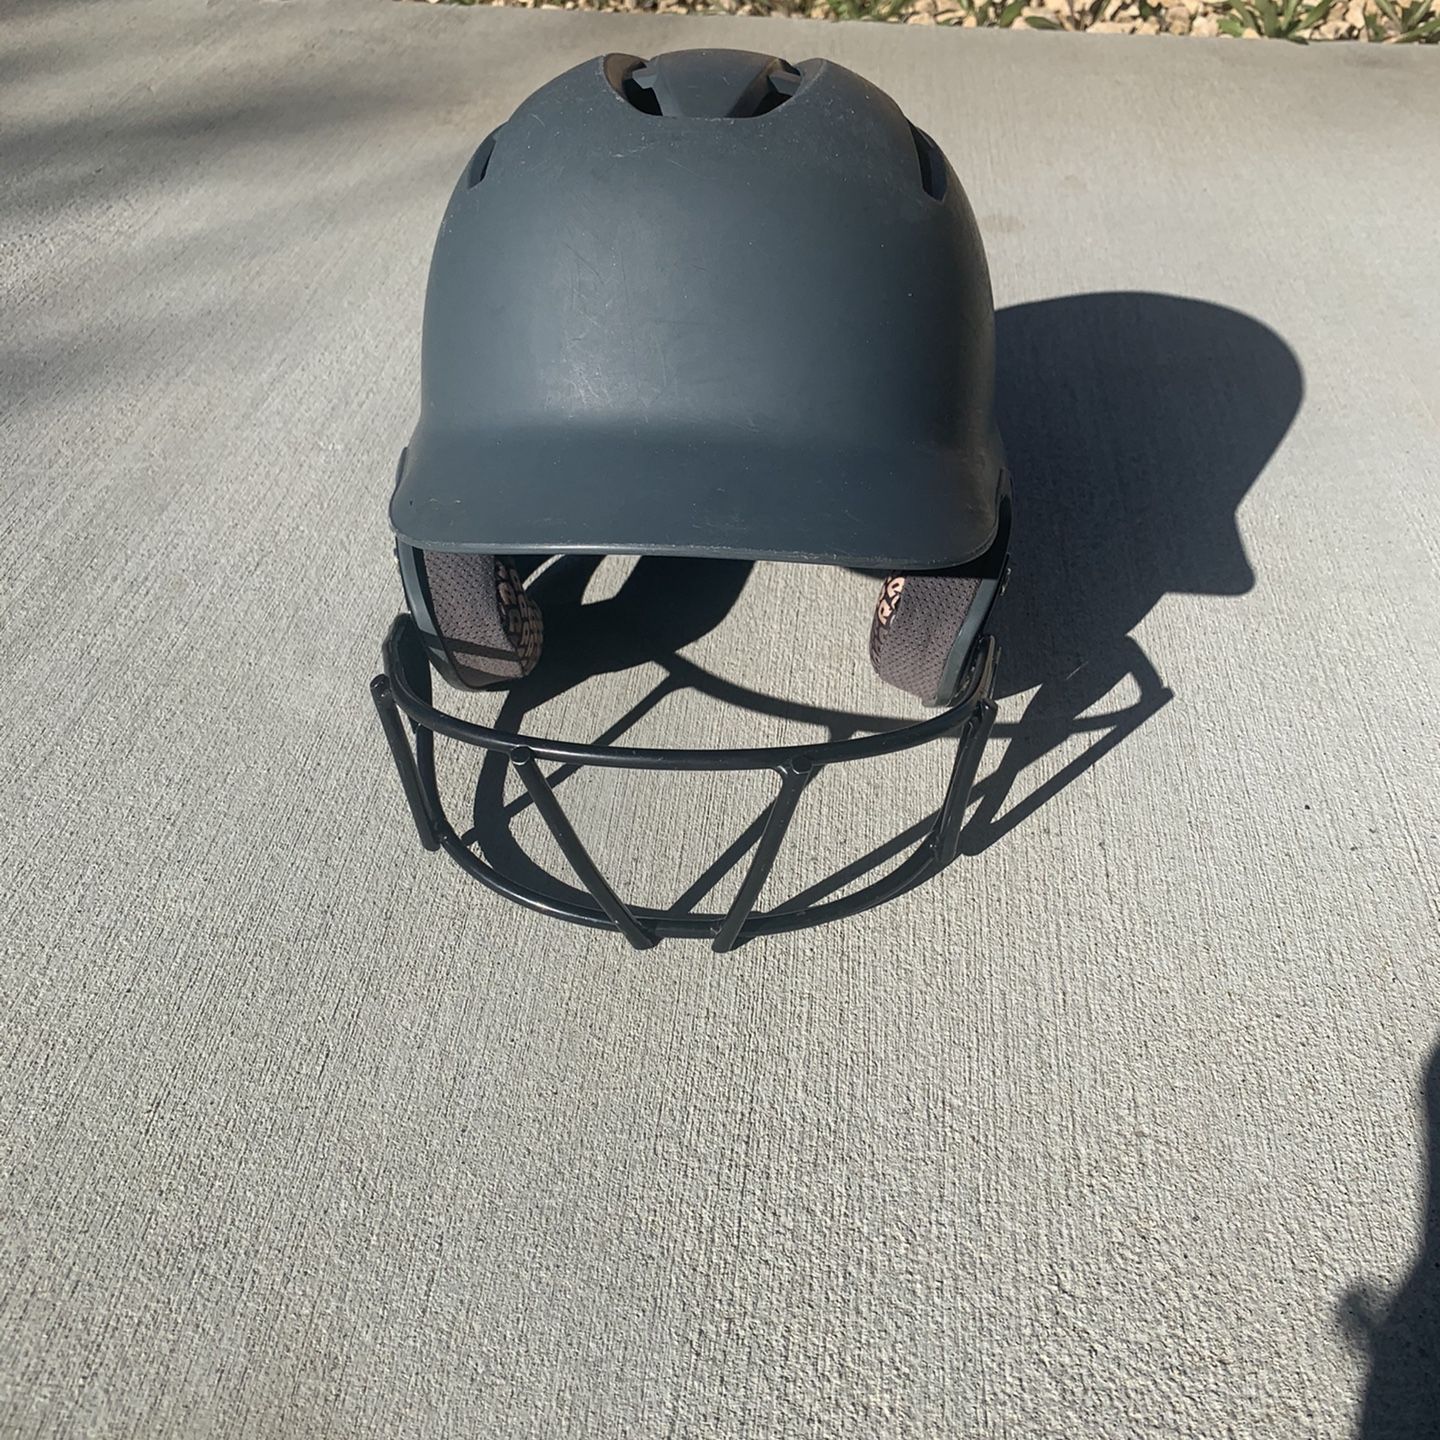 DeMarini Fastpitch Softball Batting Helmet 🥎